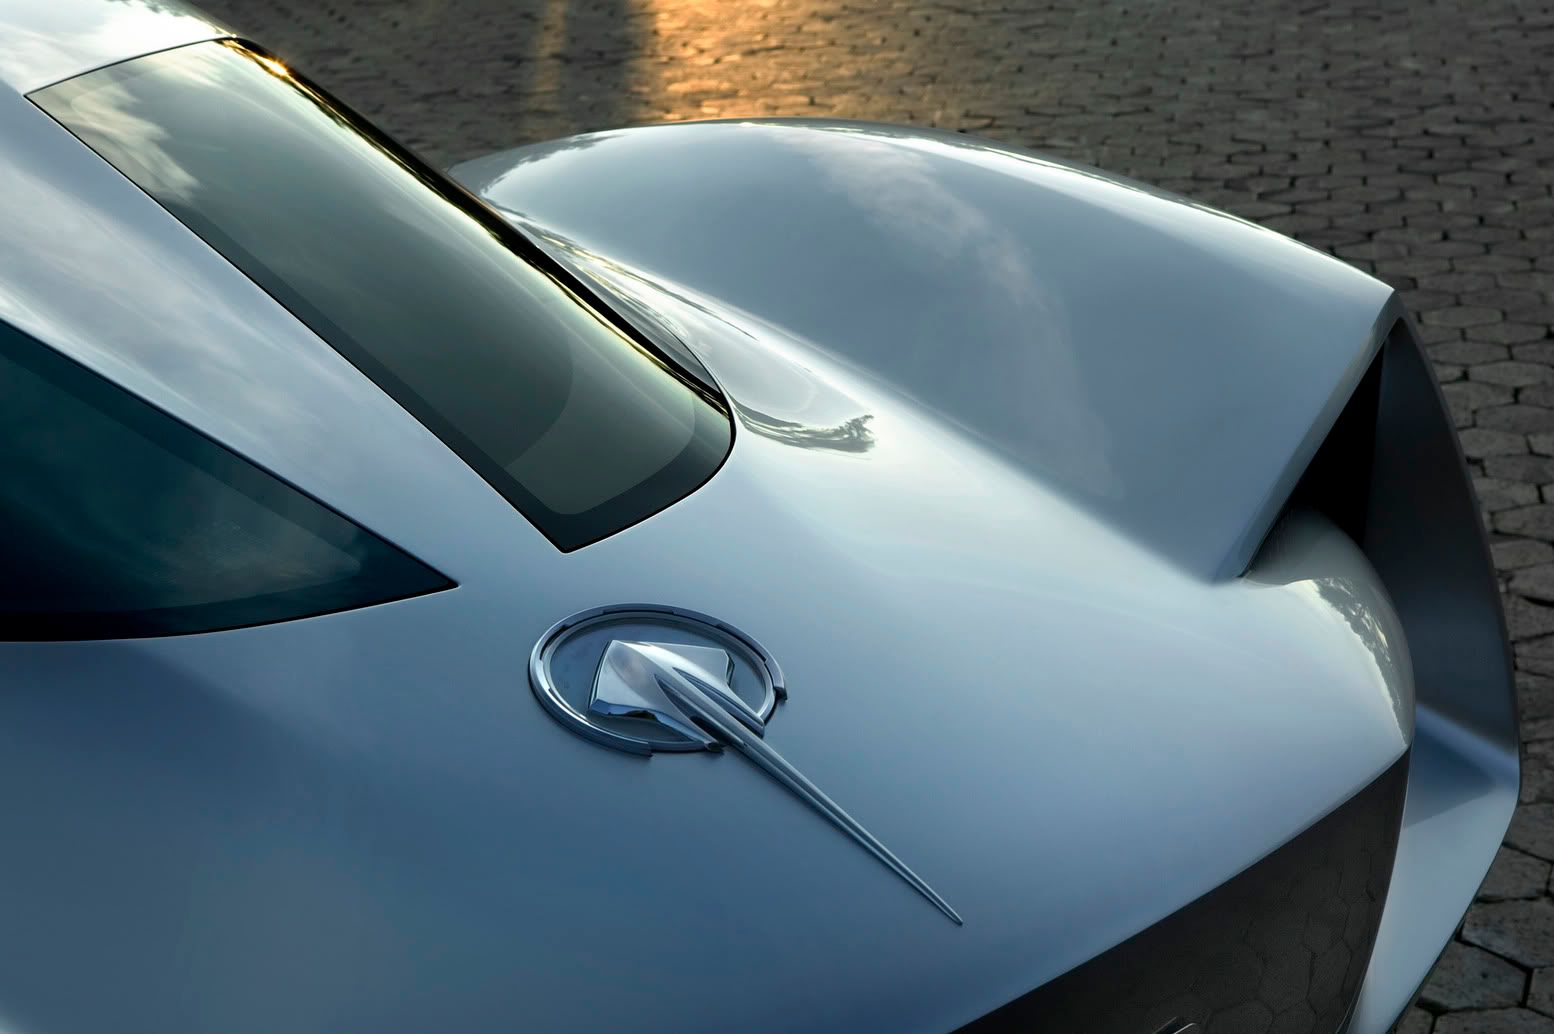 The New Corvette Stingray Concept Page 3 Camaro5 Chevy Camaro Forum